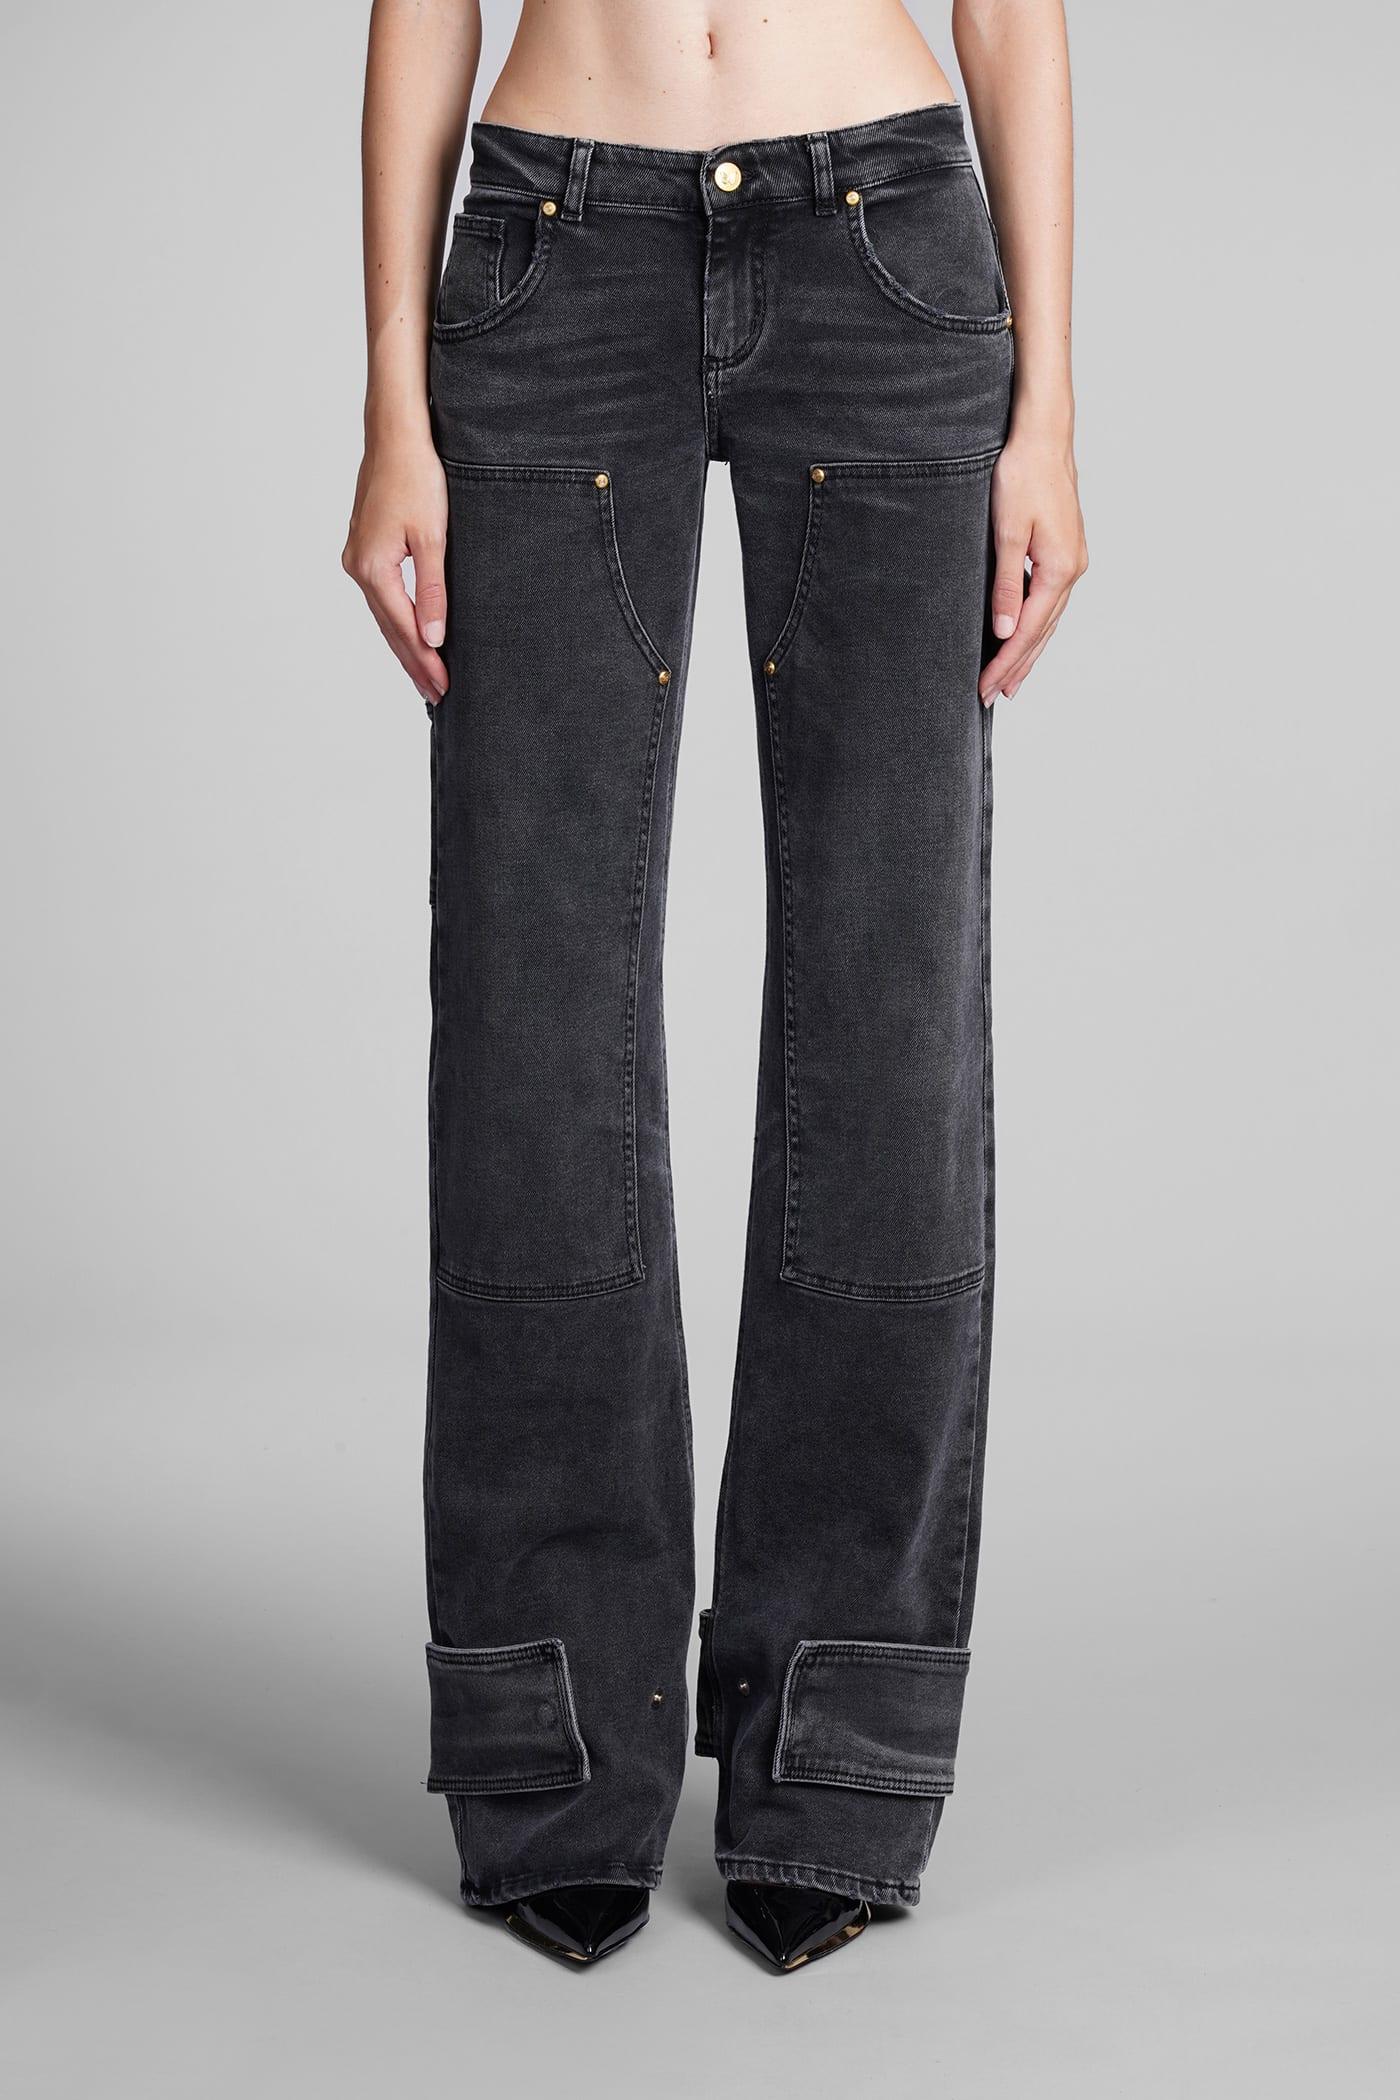 Blumarine Jeans In Black Denim in Blue | Lyst